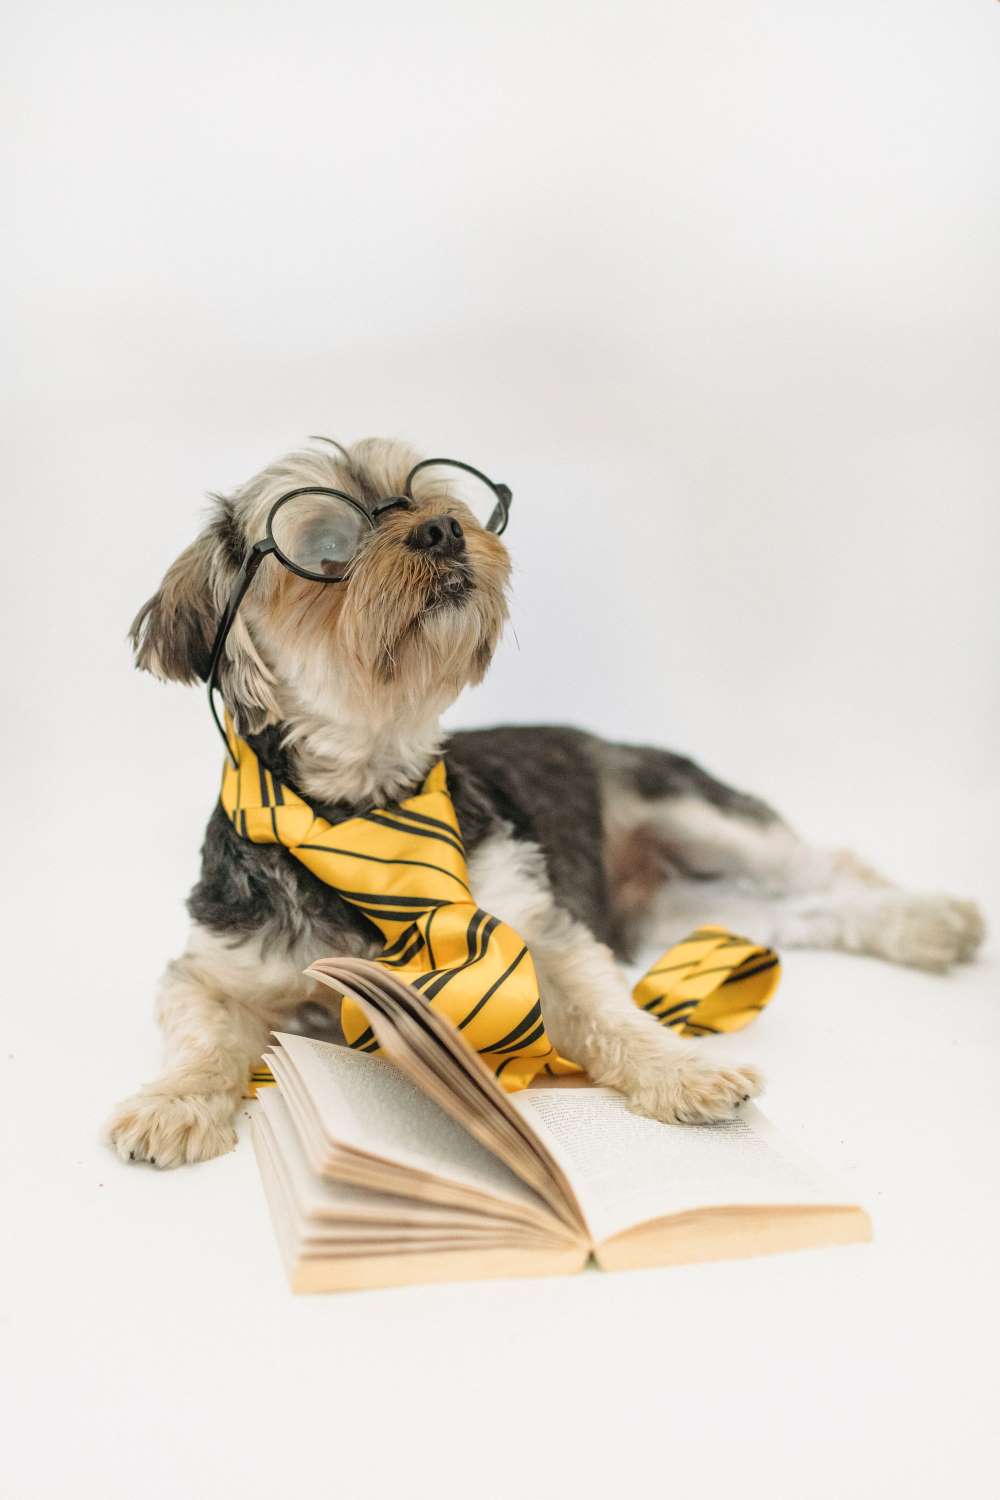 Bichon mix dog with glasses